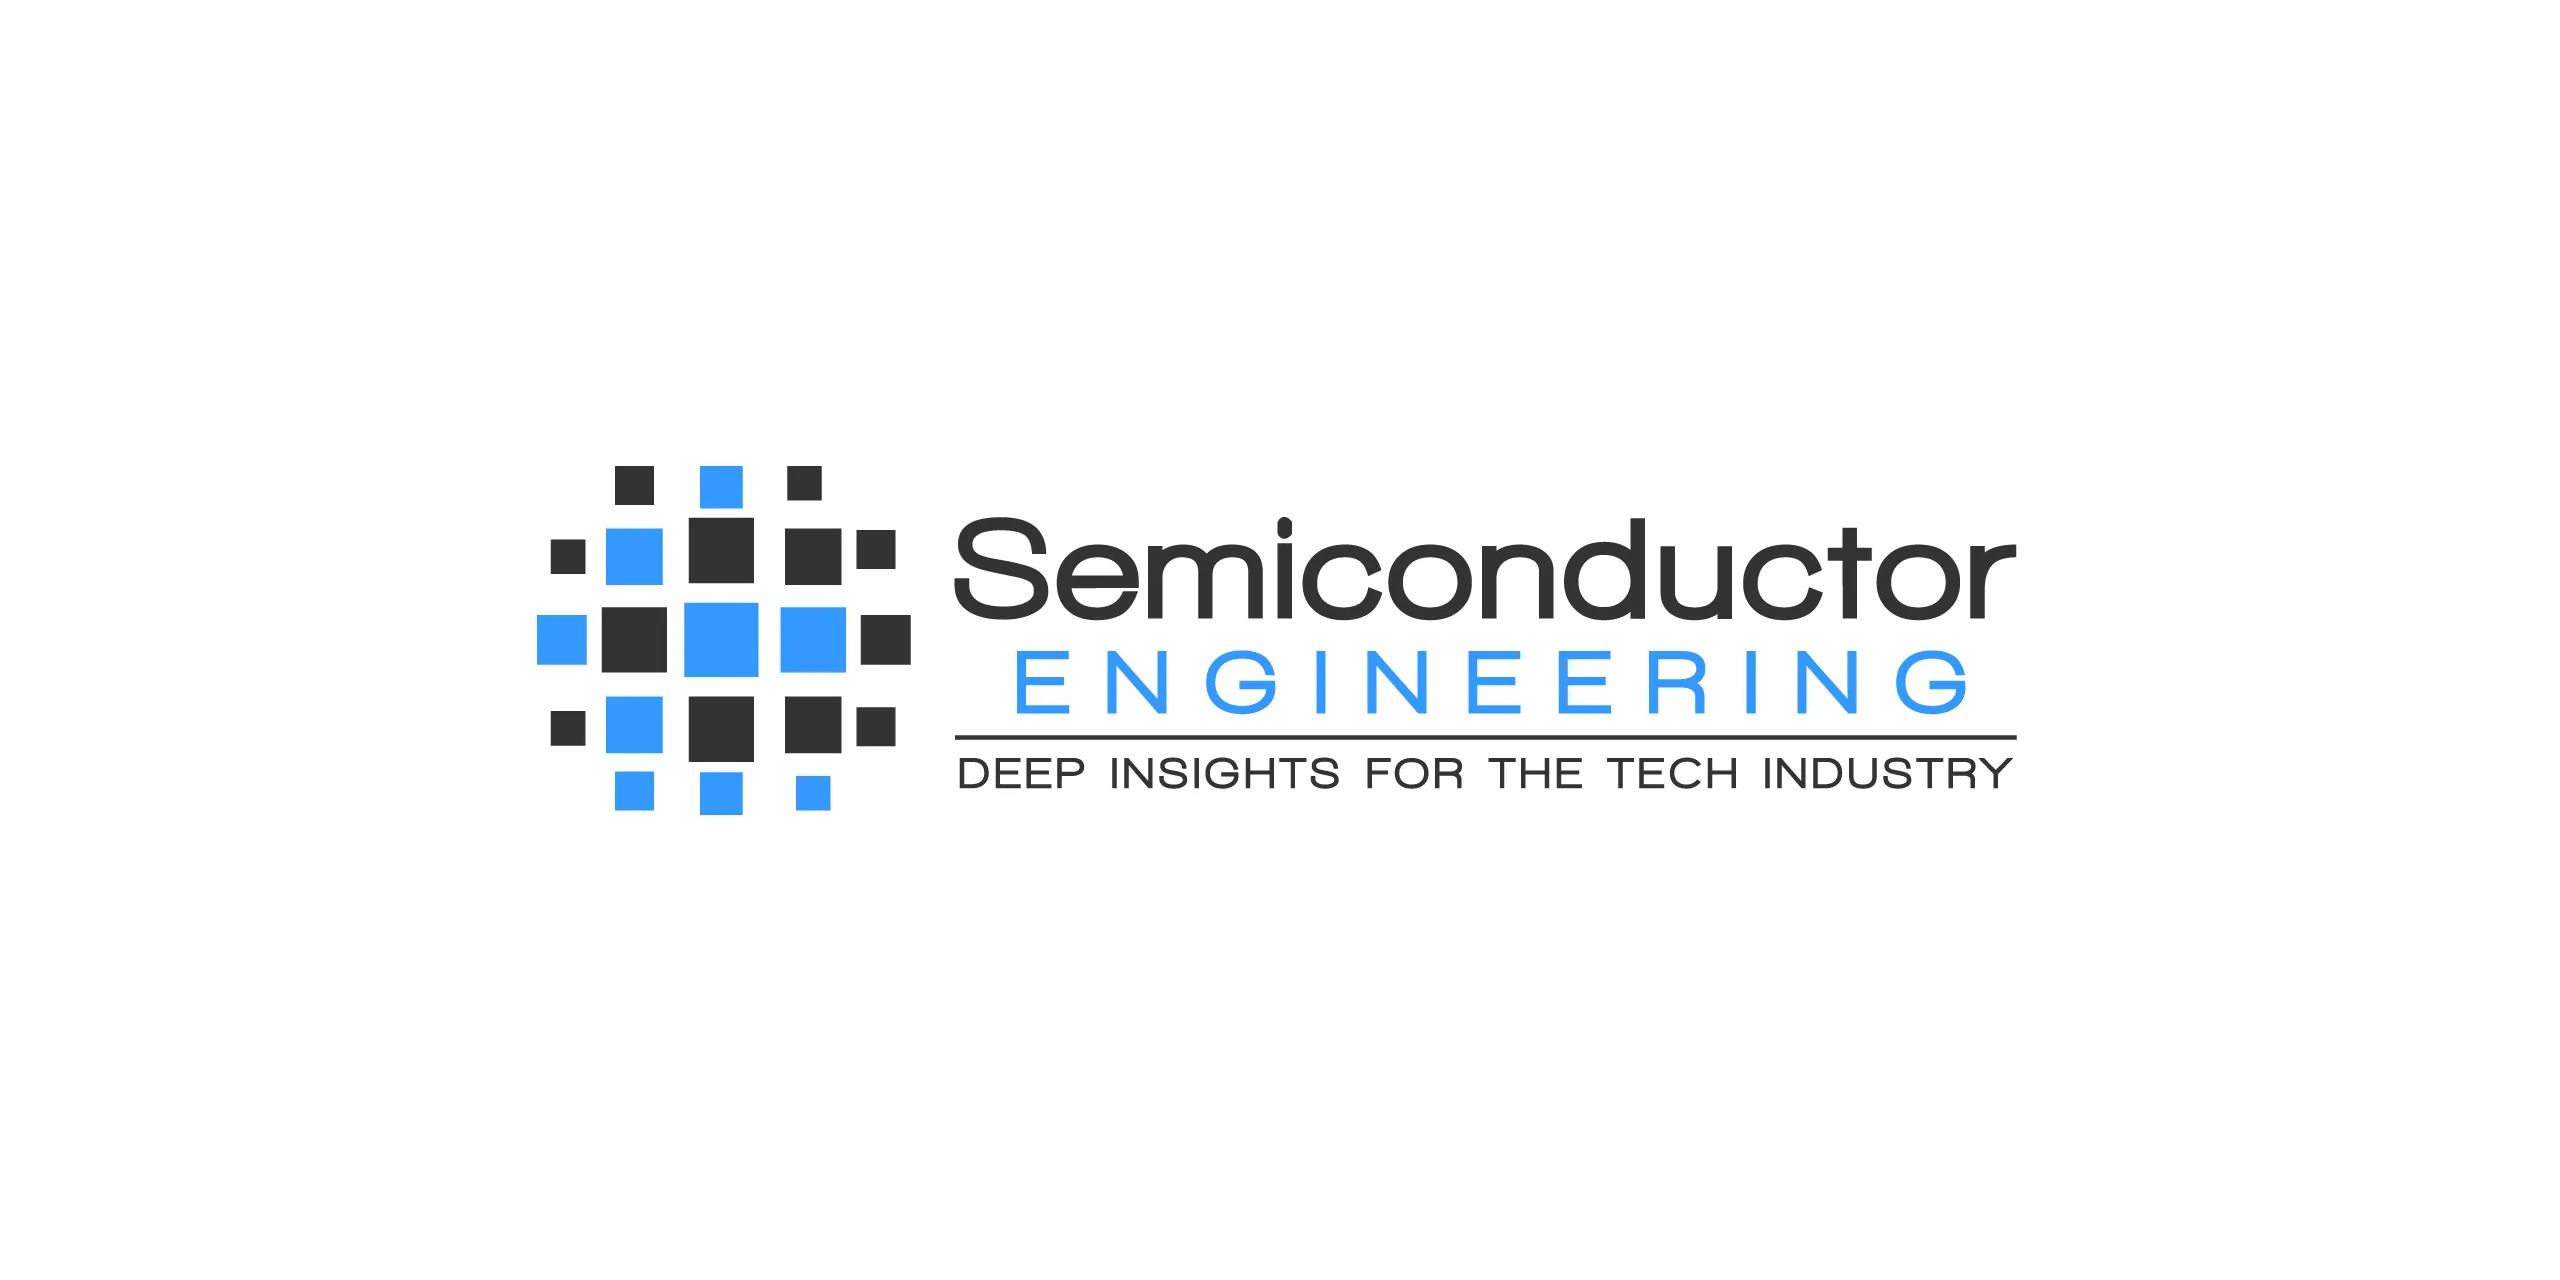 Semiconductor Engineering logo